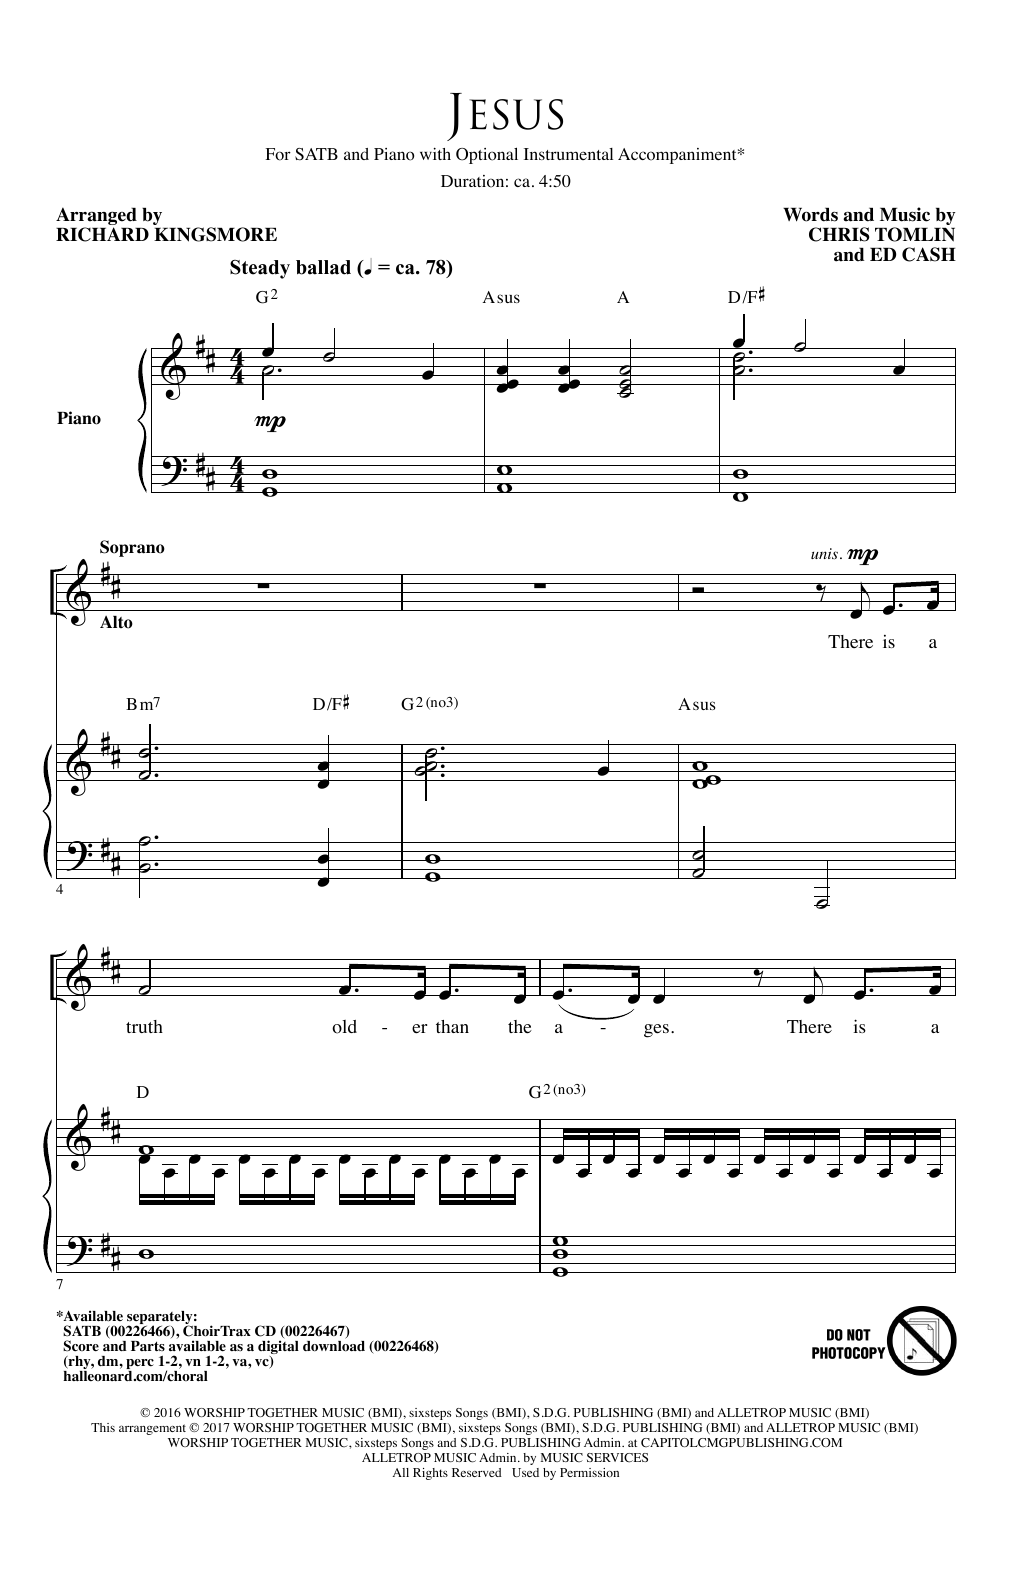 Chris Tomlin Jesus (arr. Richard Kingsmore) Sheet Music Notes & Chords for SATB - Download or Print PDF